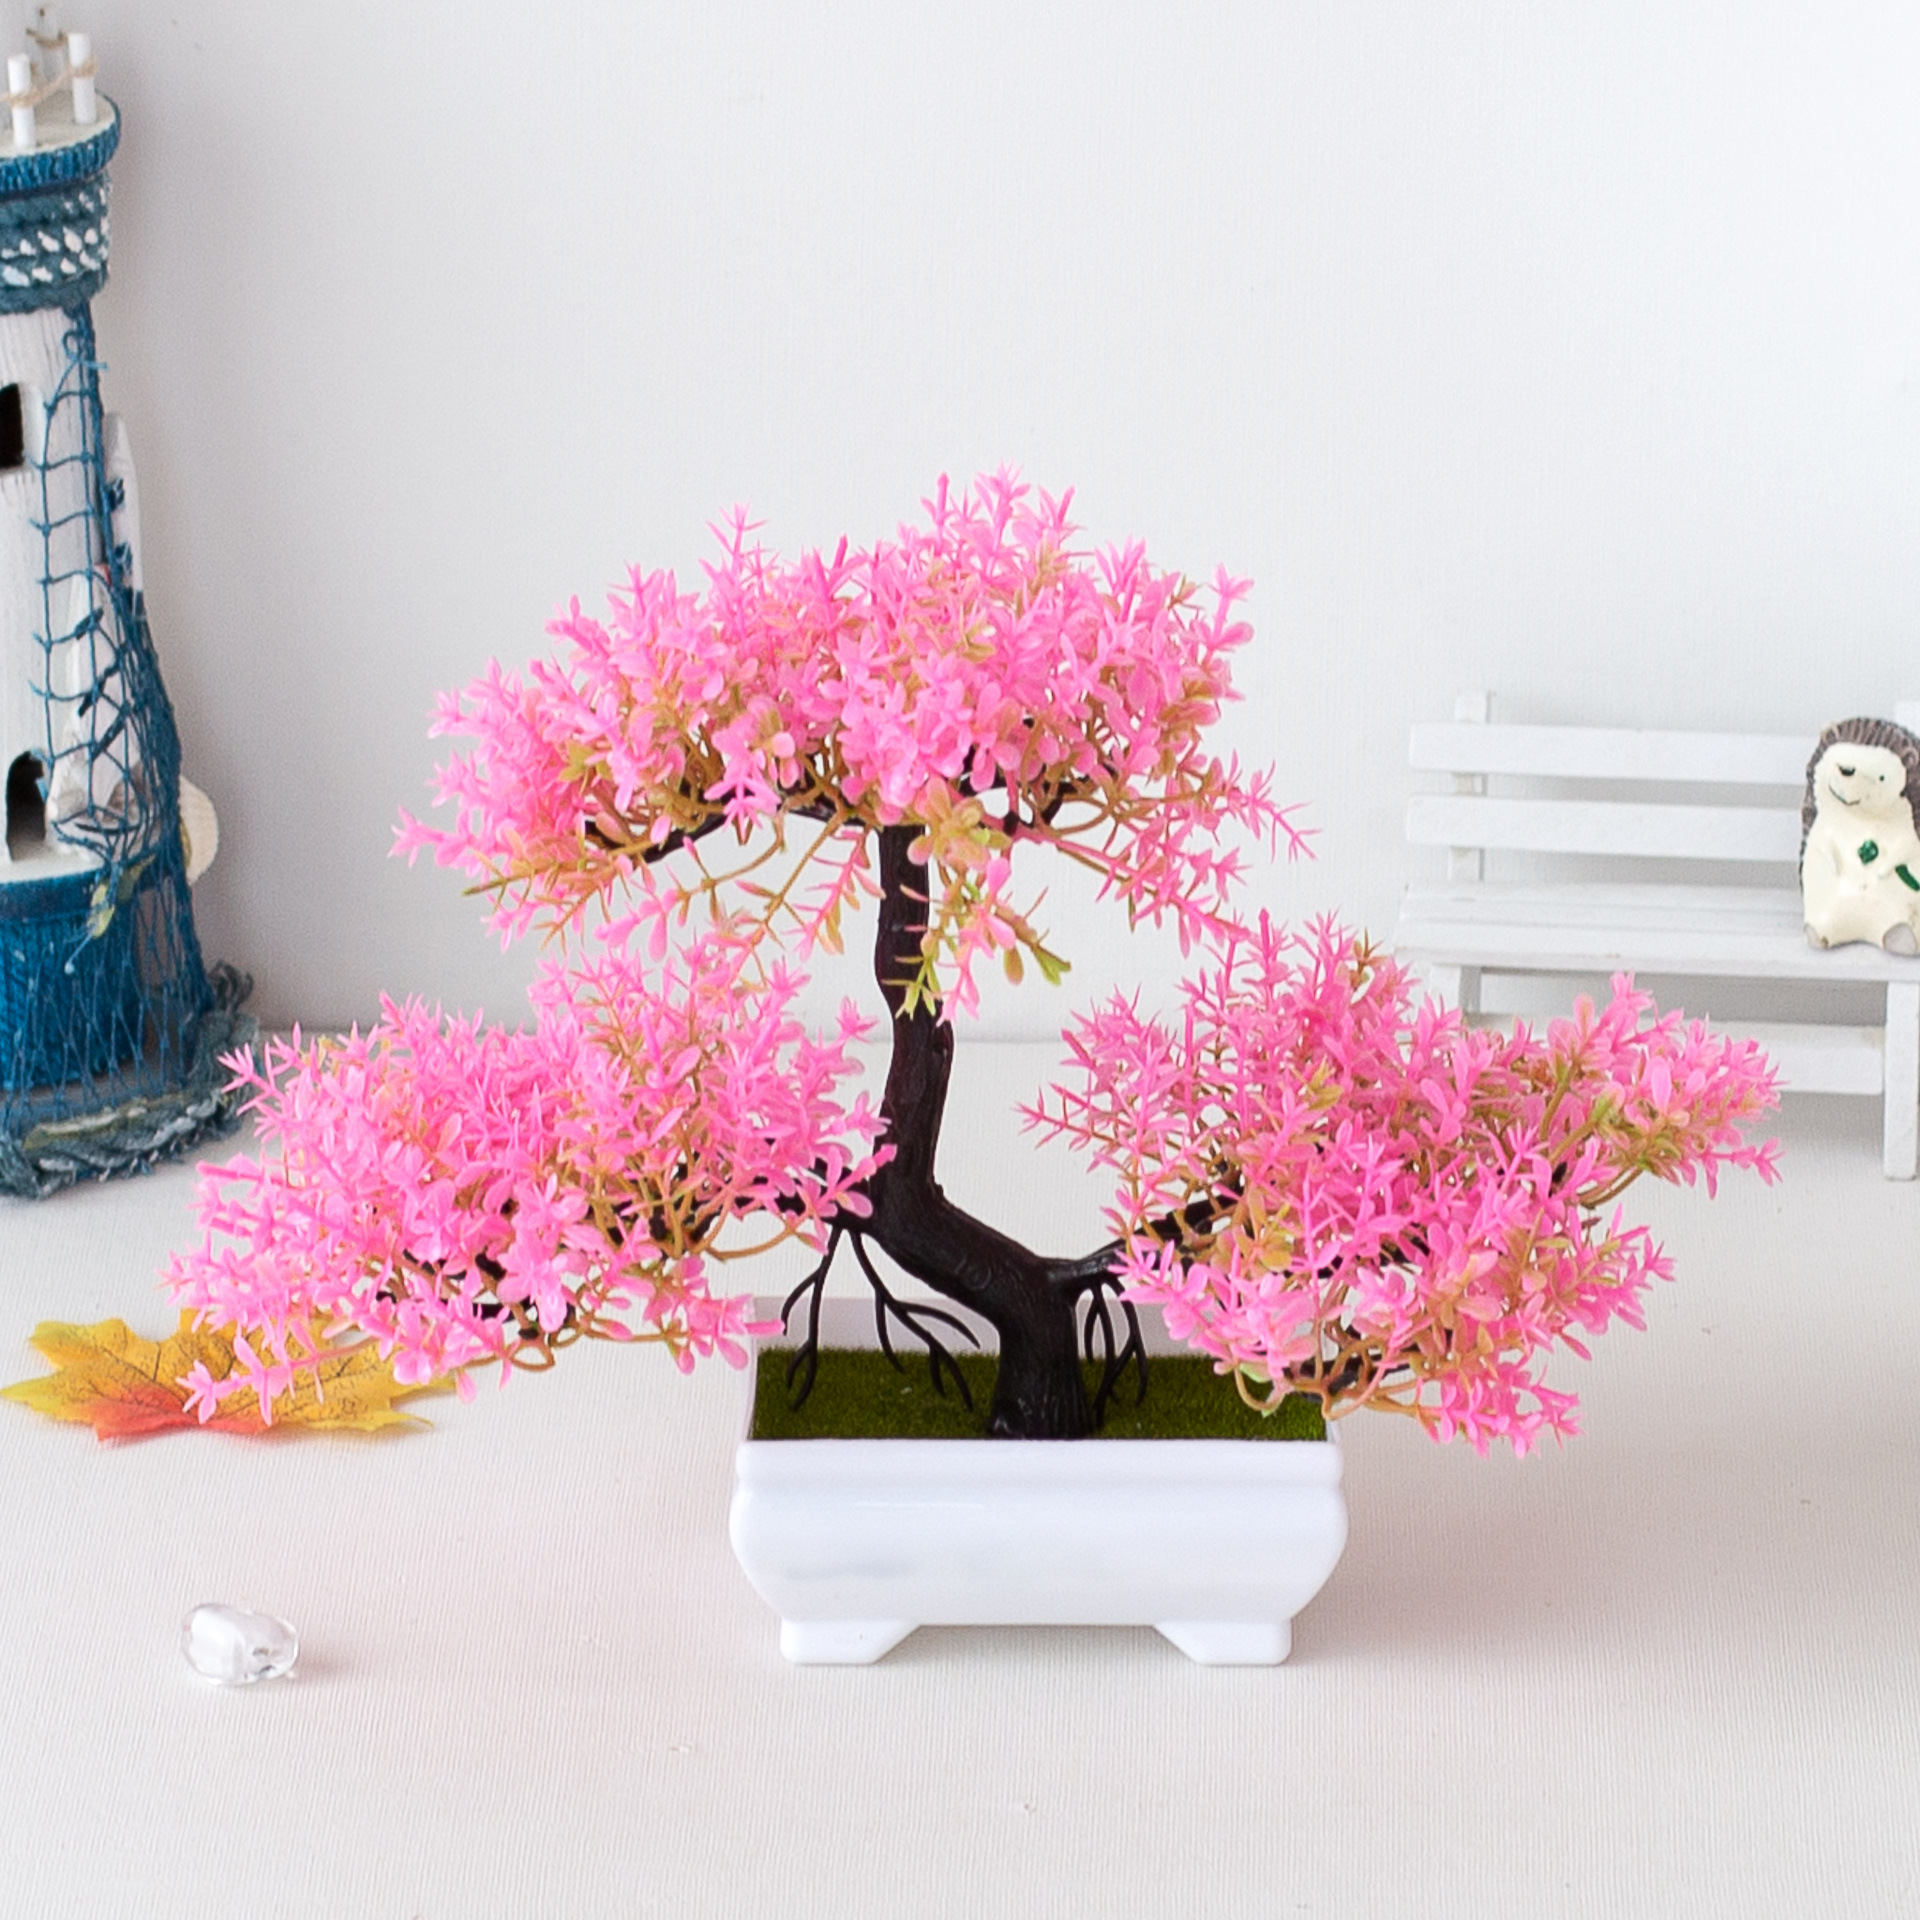 Factory direct three-pronged small green pine simulation plant home decoration ornaments bonsai bonsai